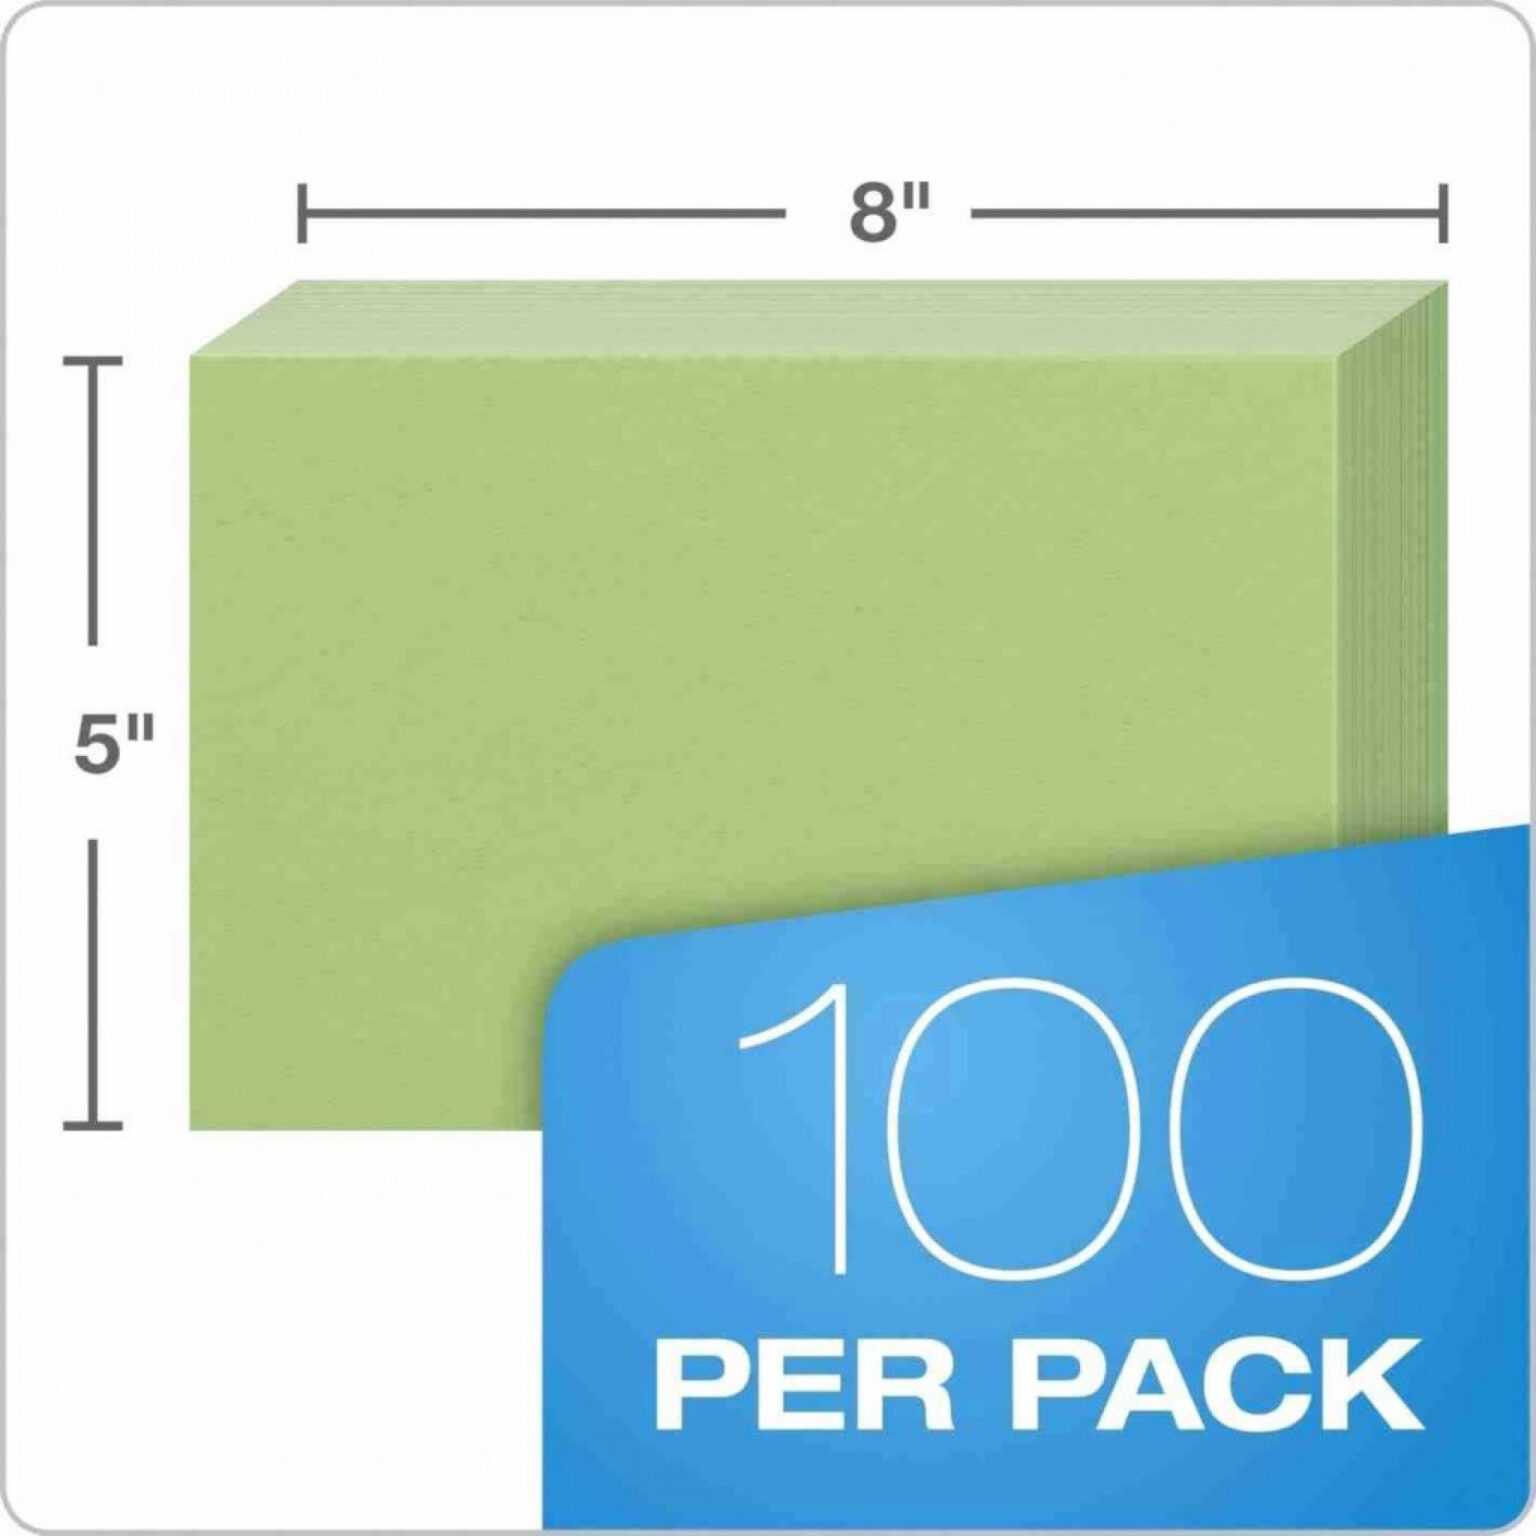 009-template-ideas-index-card-word-impressive-3x5-microsoft-pertaining